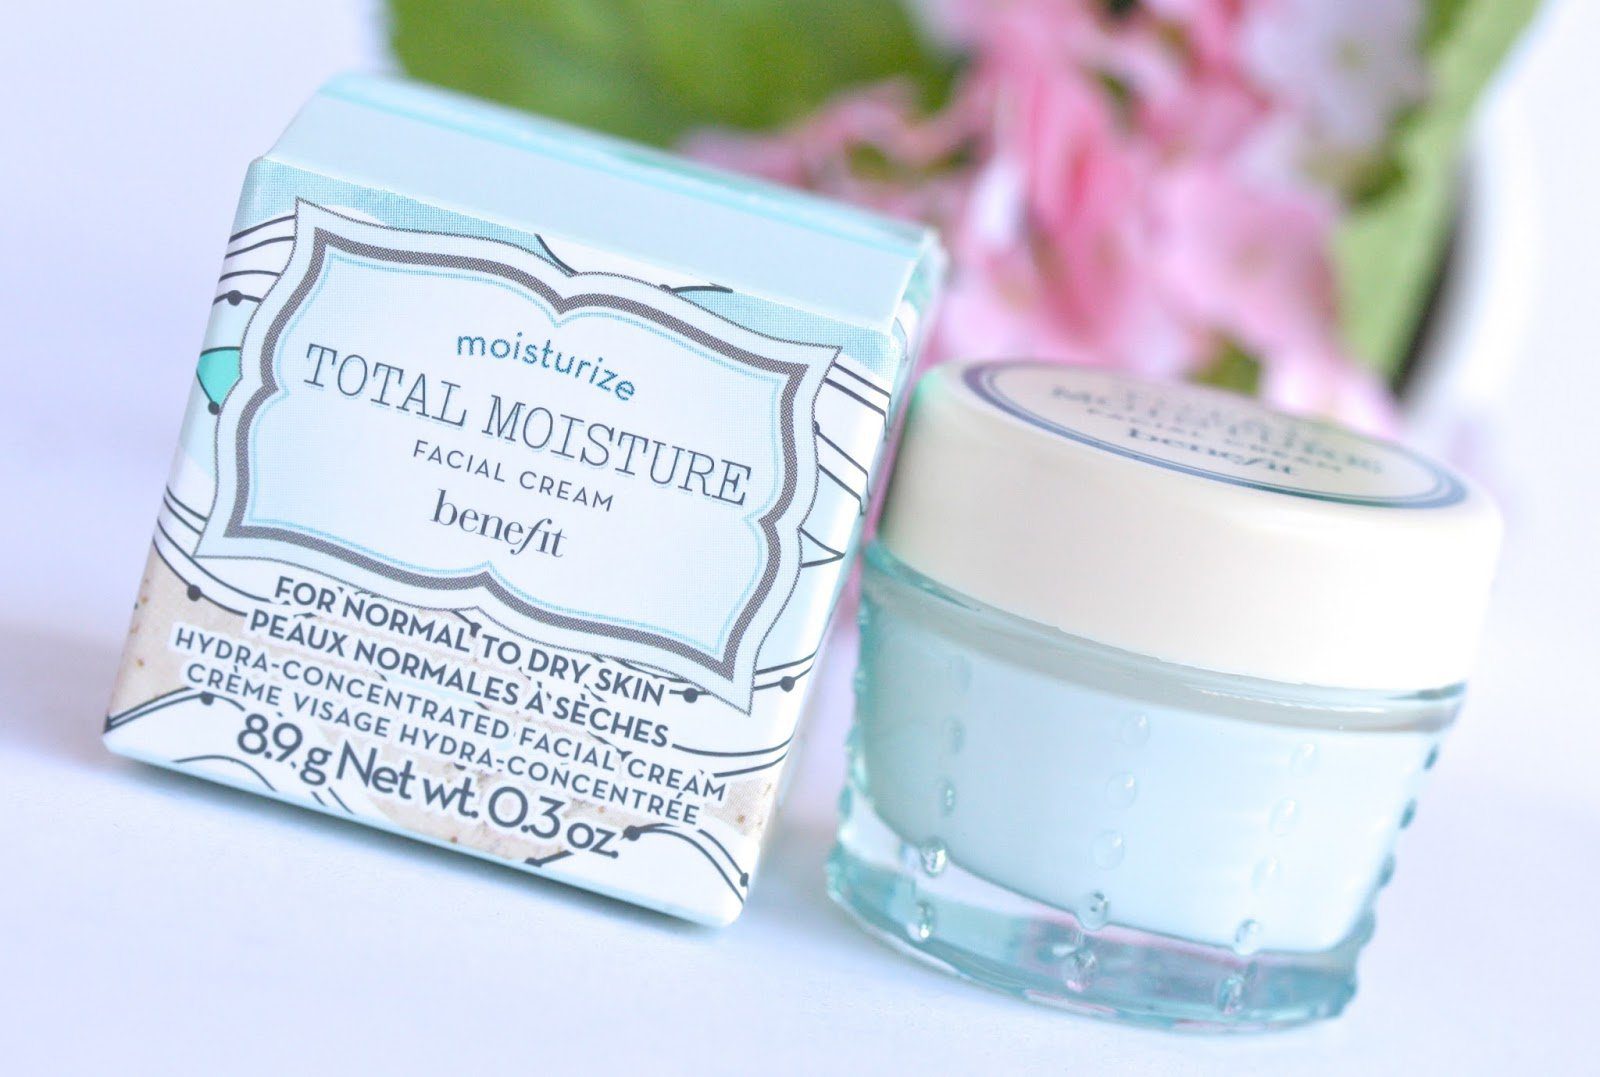 benefit total moisture facial cream